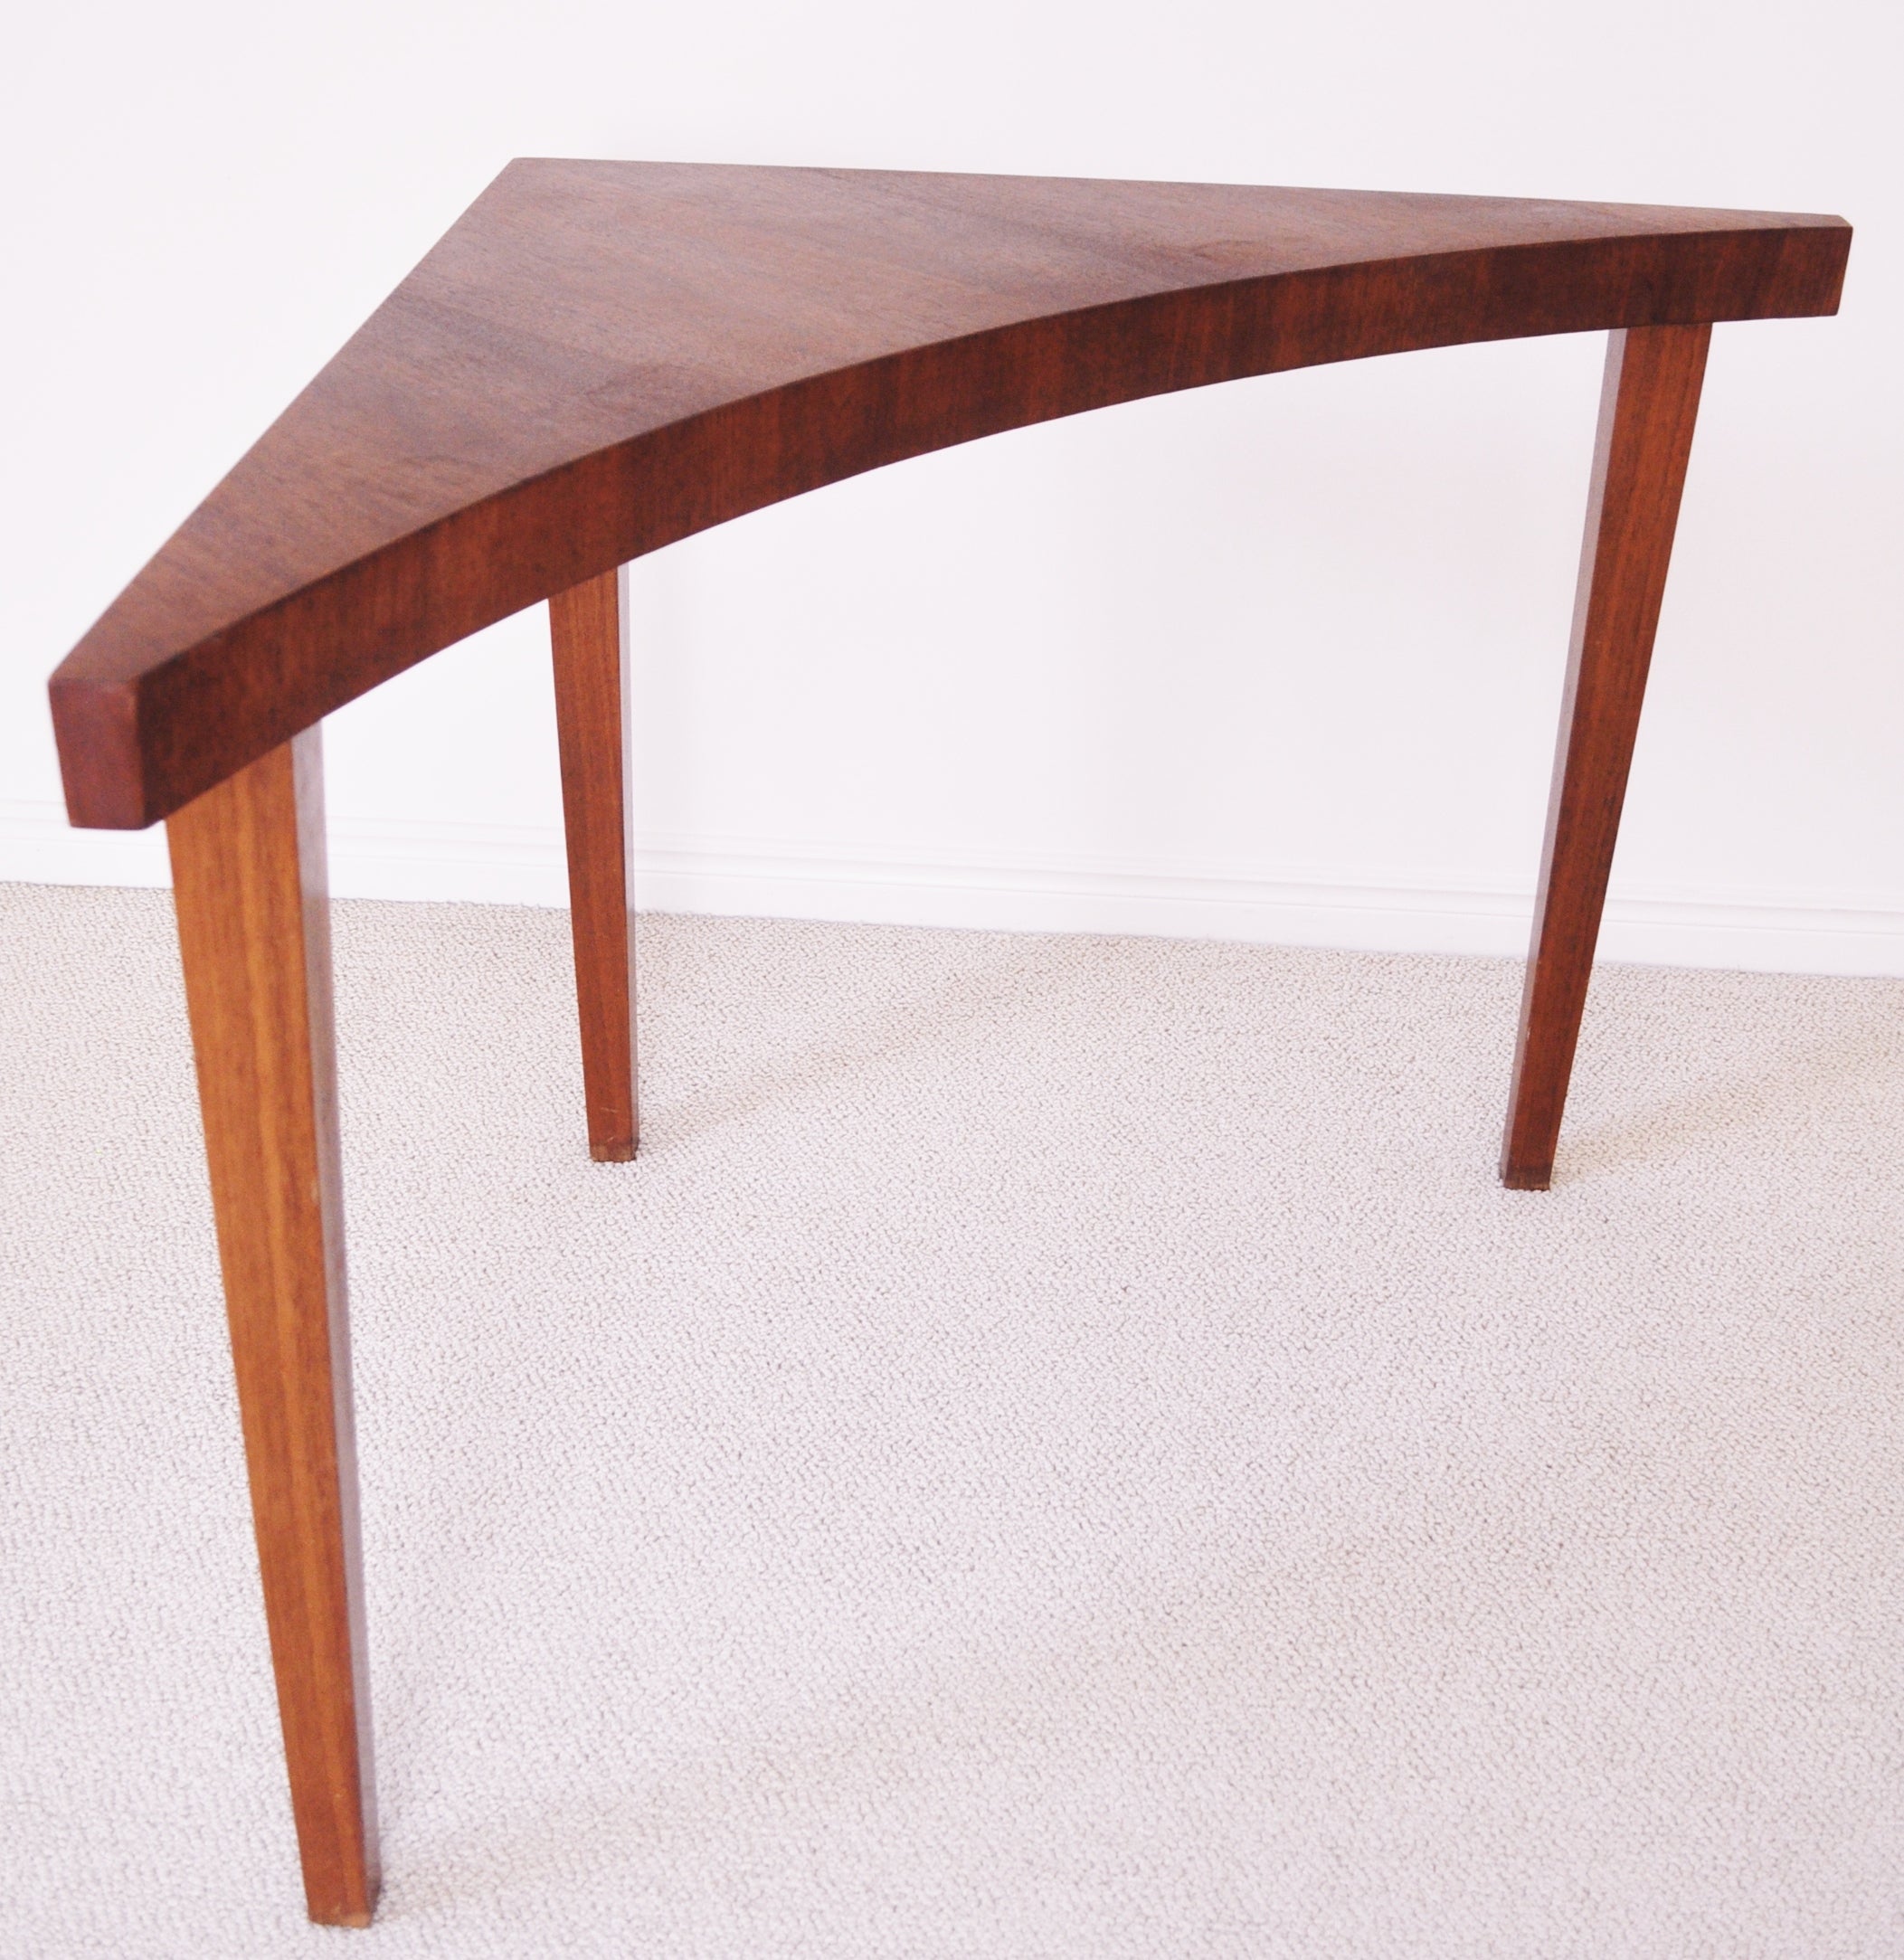 American 1960's Modern Tall Corner Table by Milo Baughman.